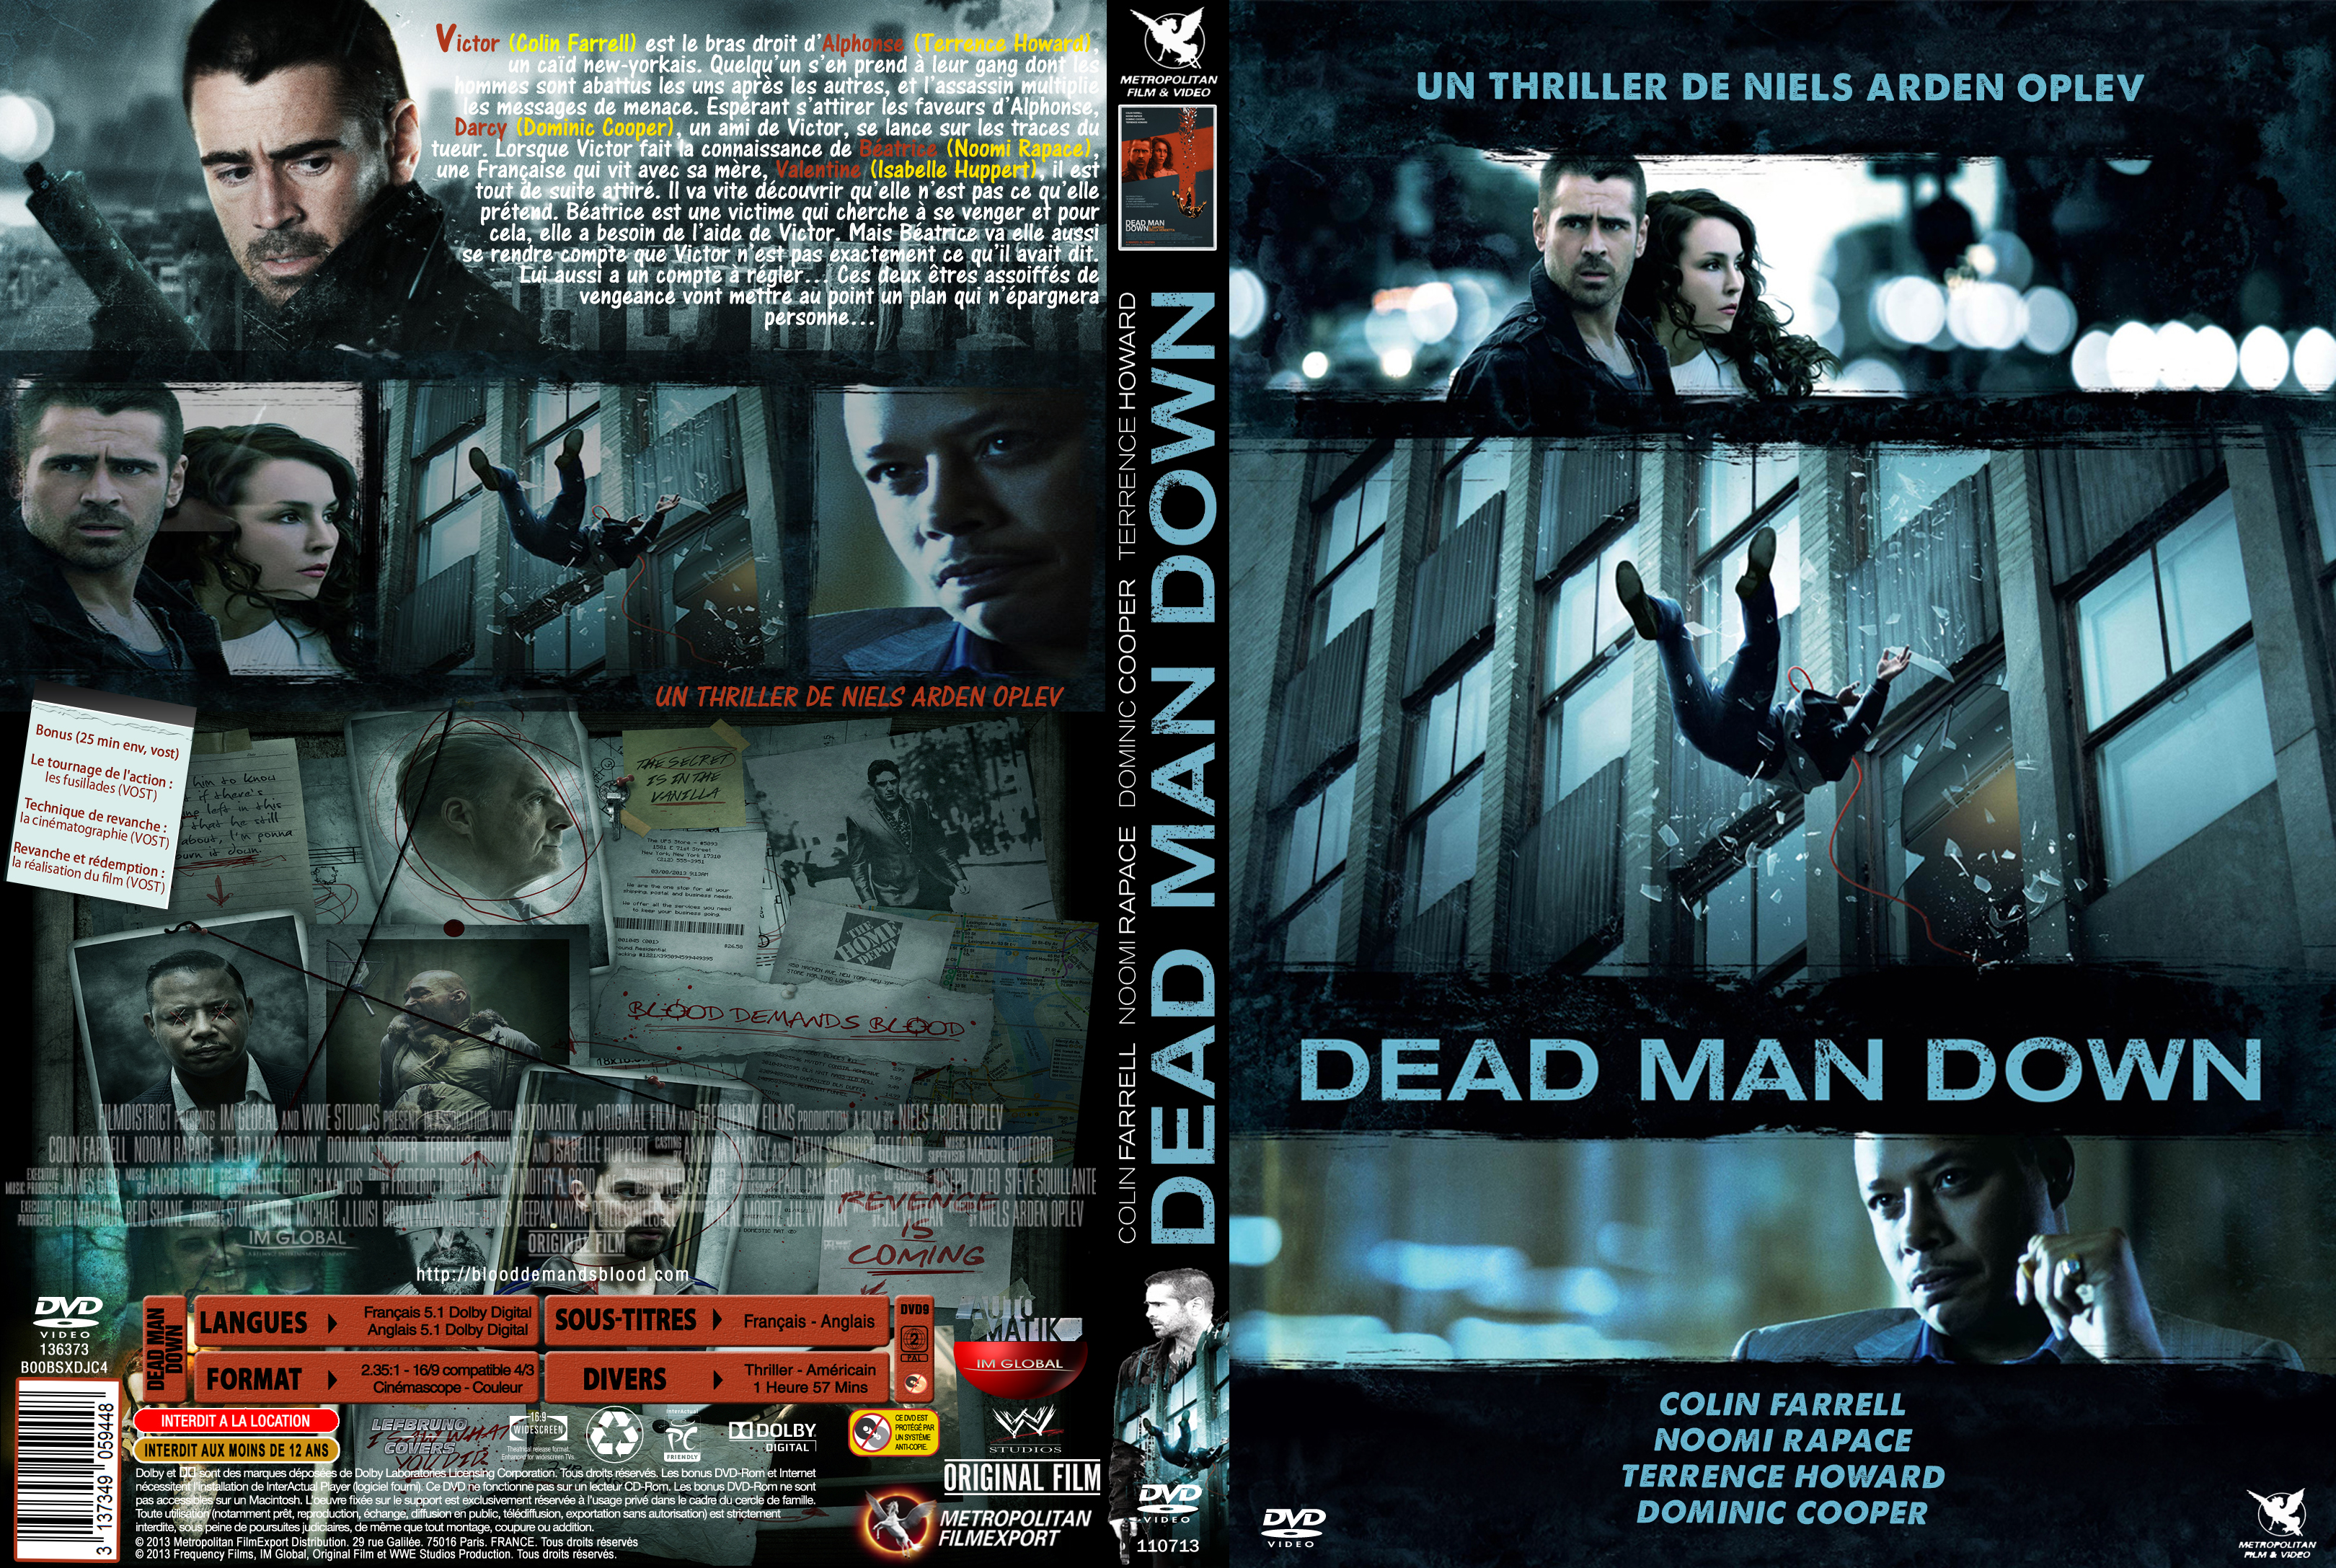 Jaquette DVD Dead Man Down custom v3